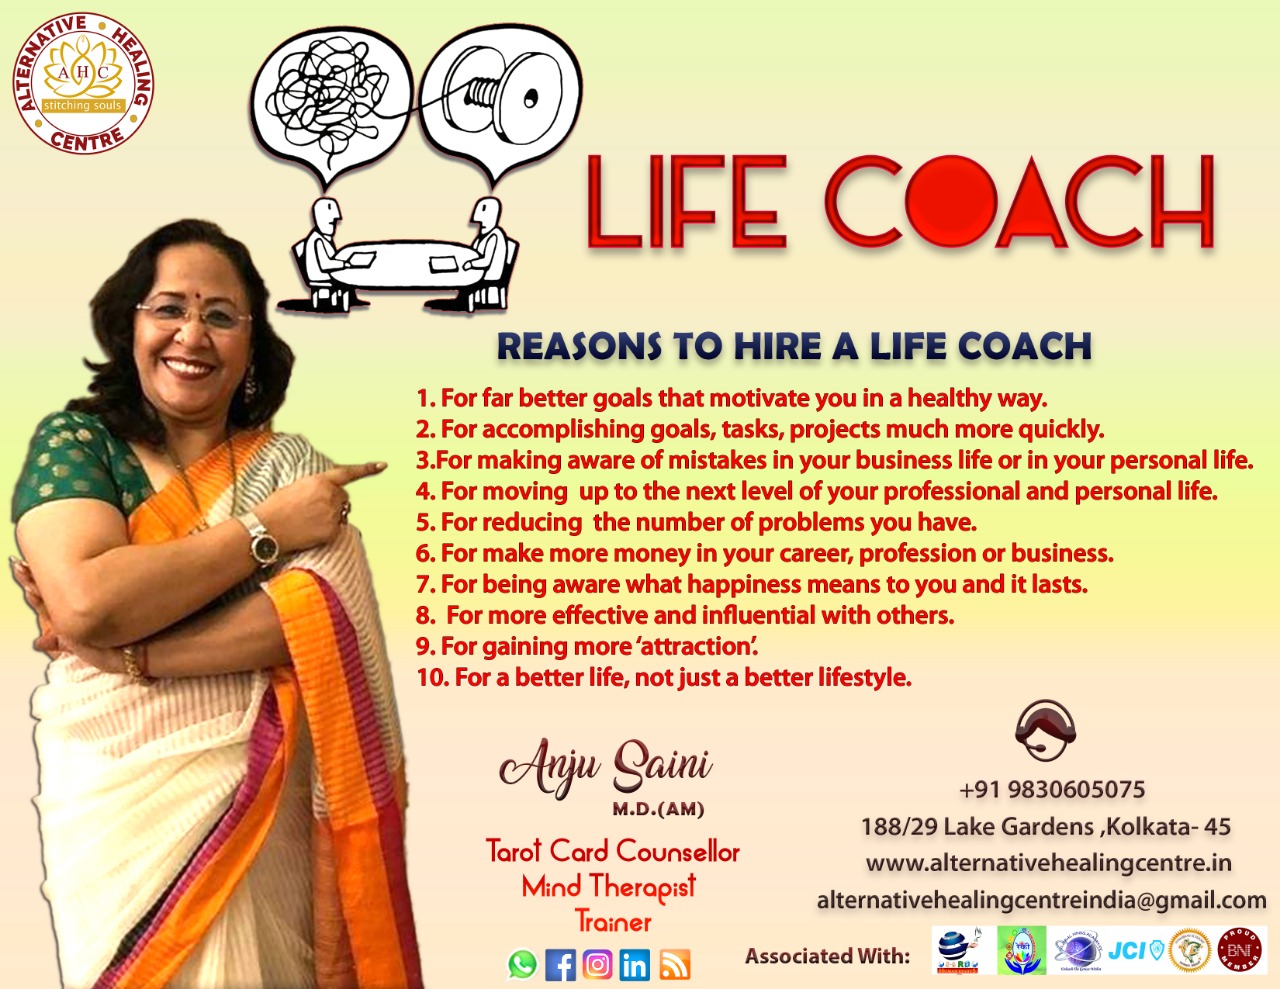 Life Coaching Sessions by Anju Saini - Kathmandu